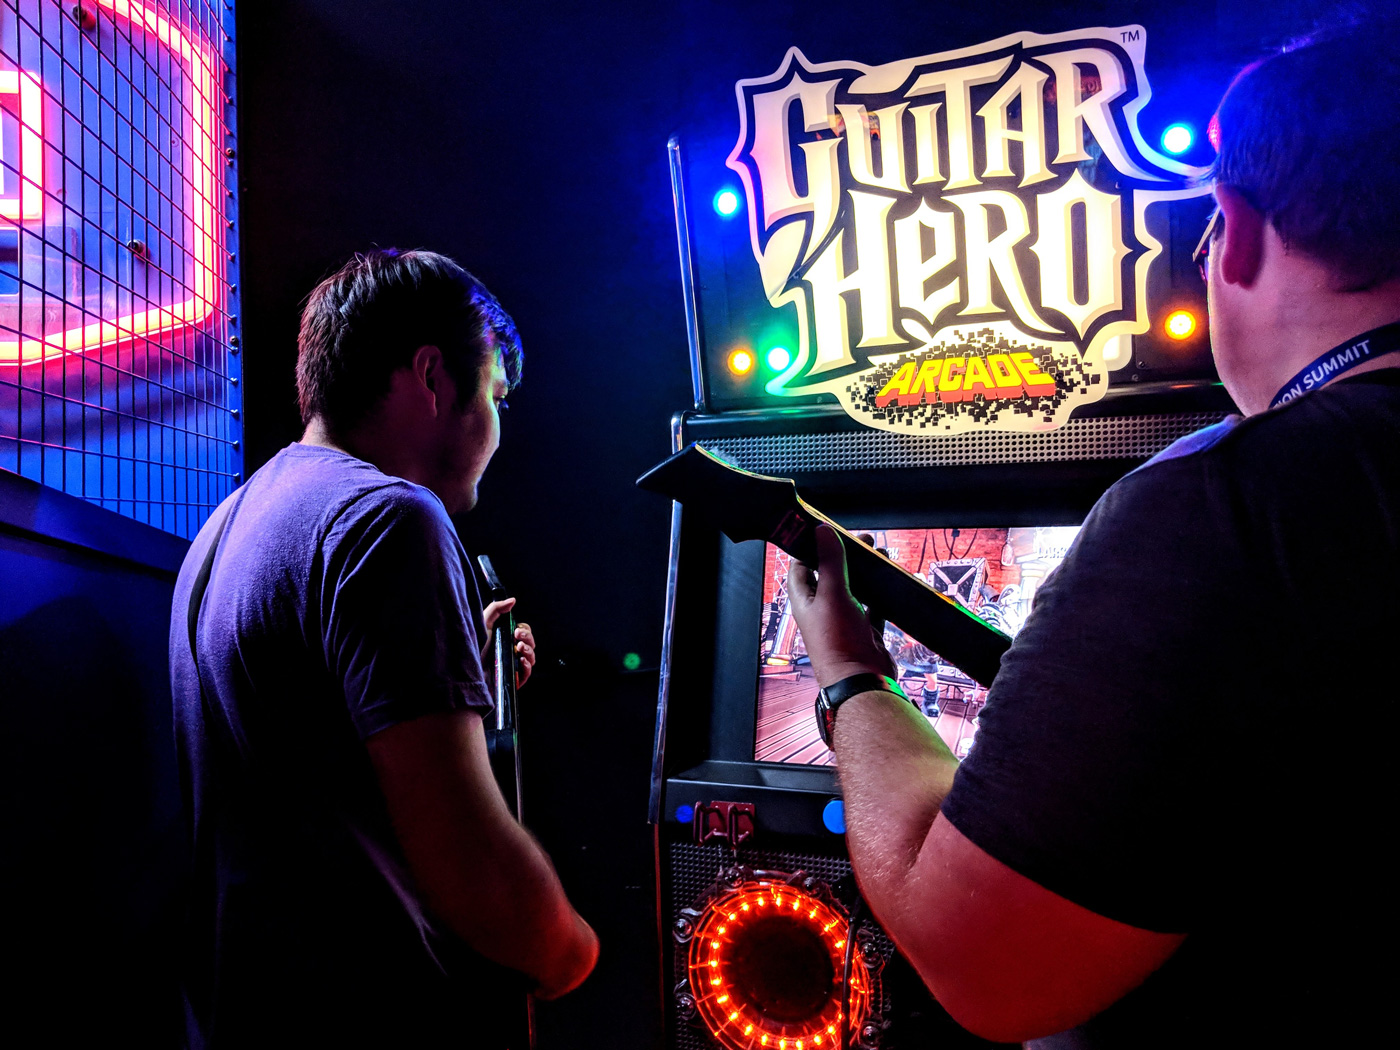 🎸 Video: bloger vperše projšov najvažču u sviti pisnju u Guitar Hero